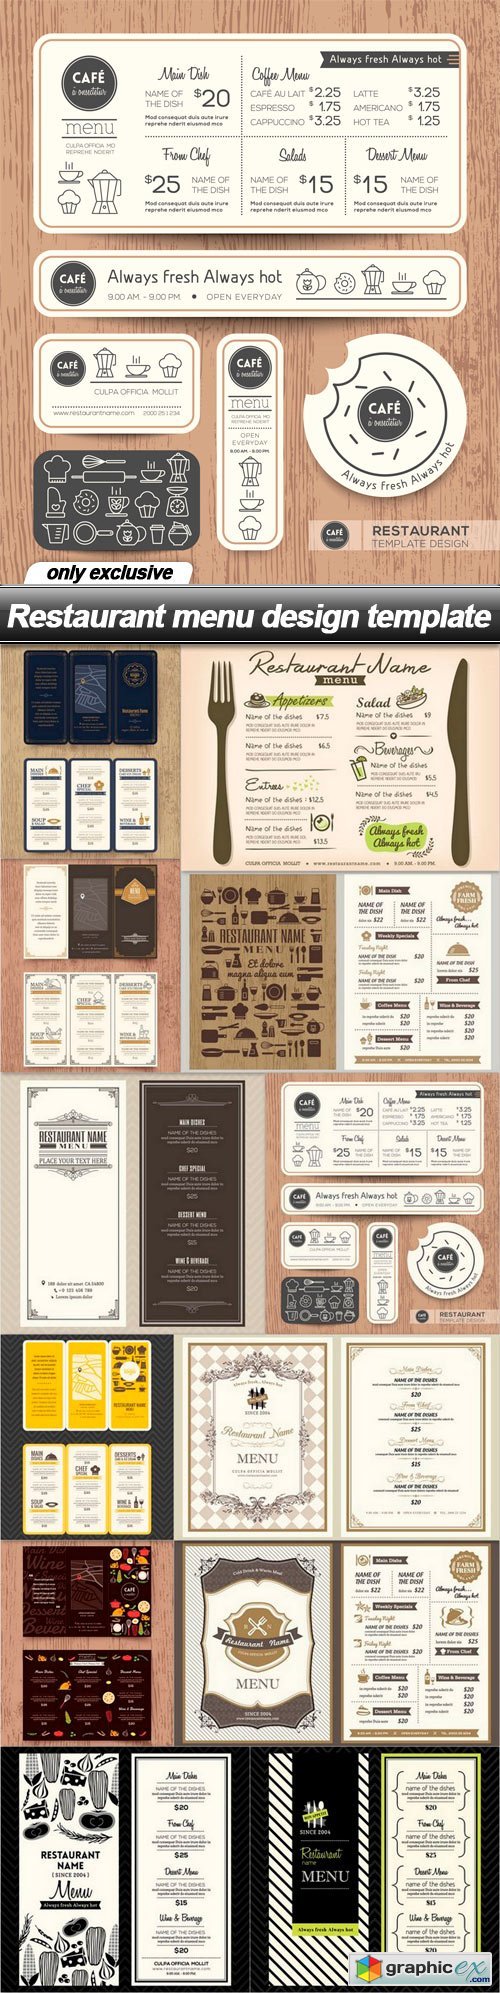 Restaurant menu design template - 12 EPS